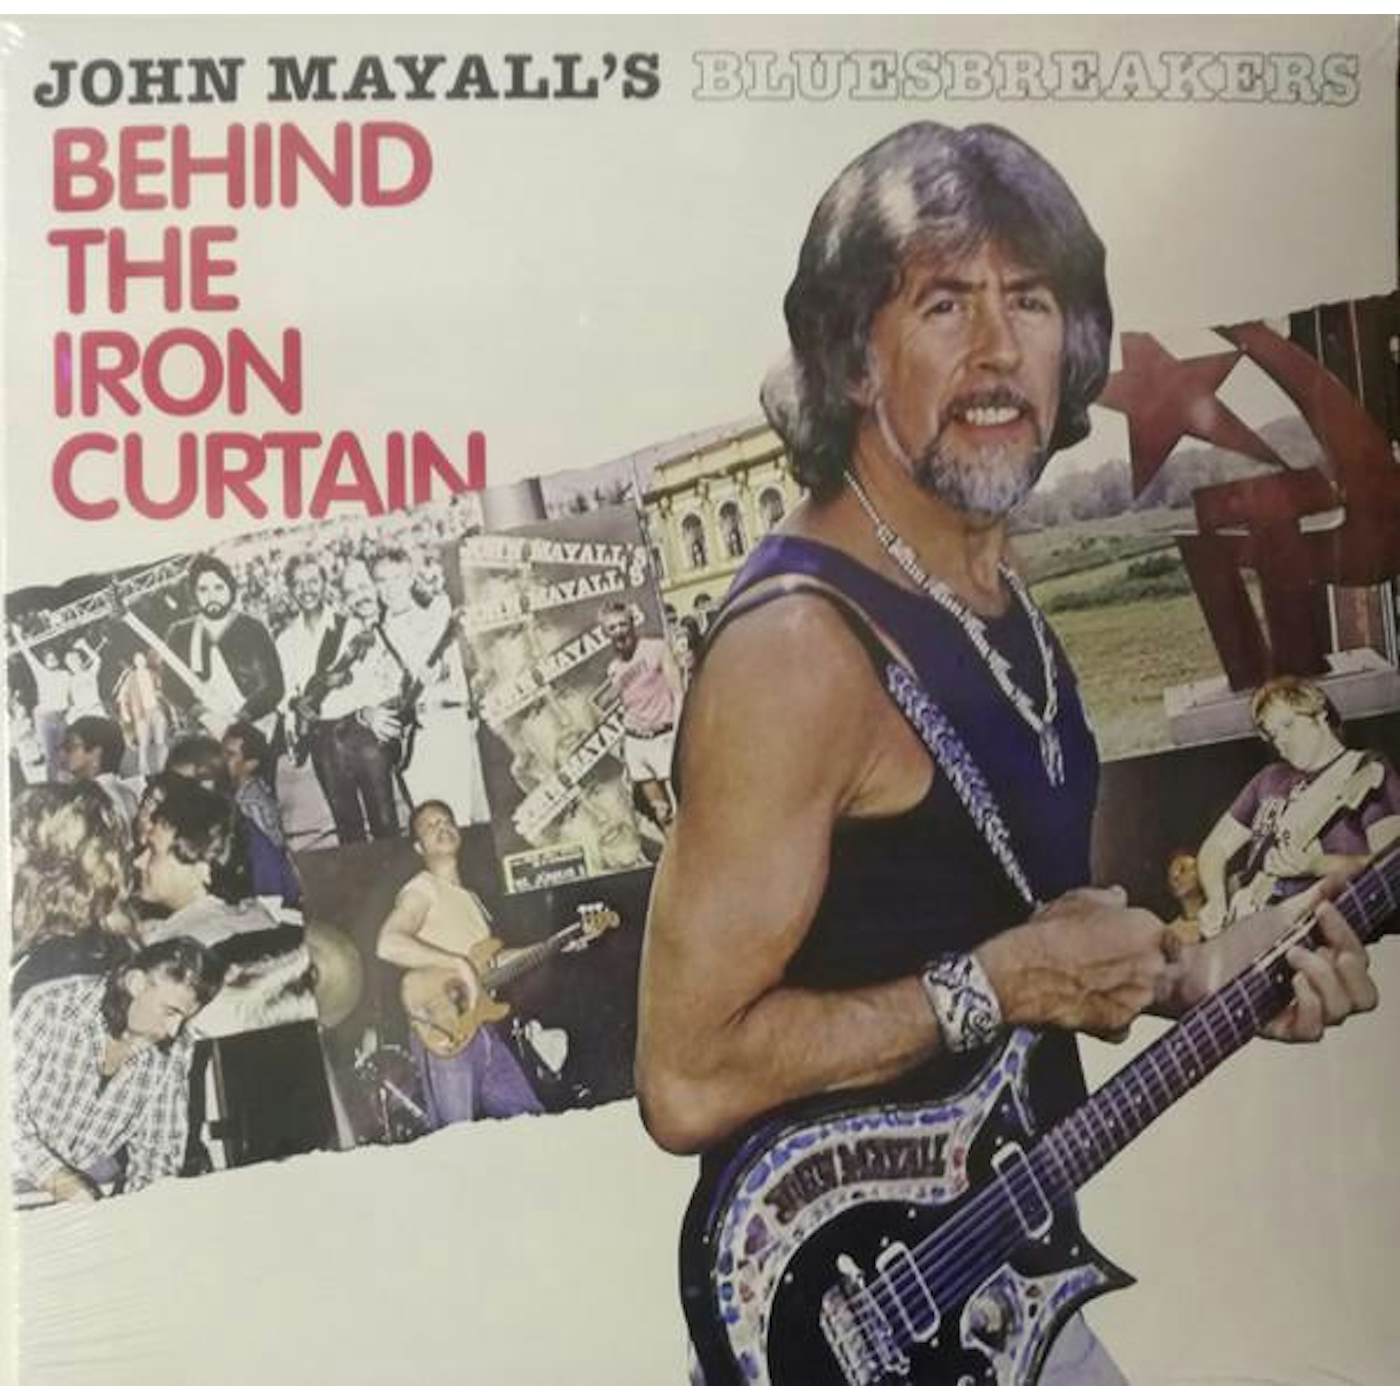 John Mayall & The Bluesbreakers Behind The Iron Curtain Vinyl Record